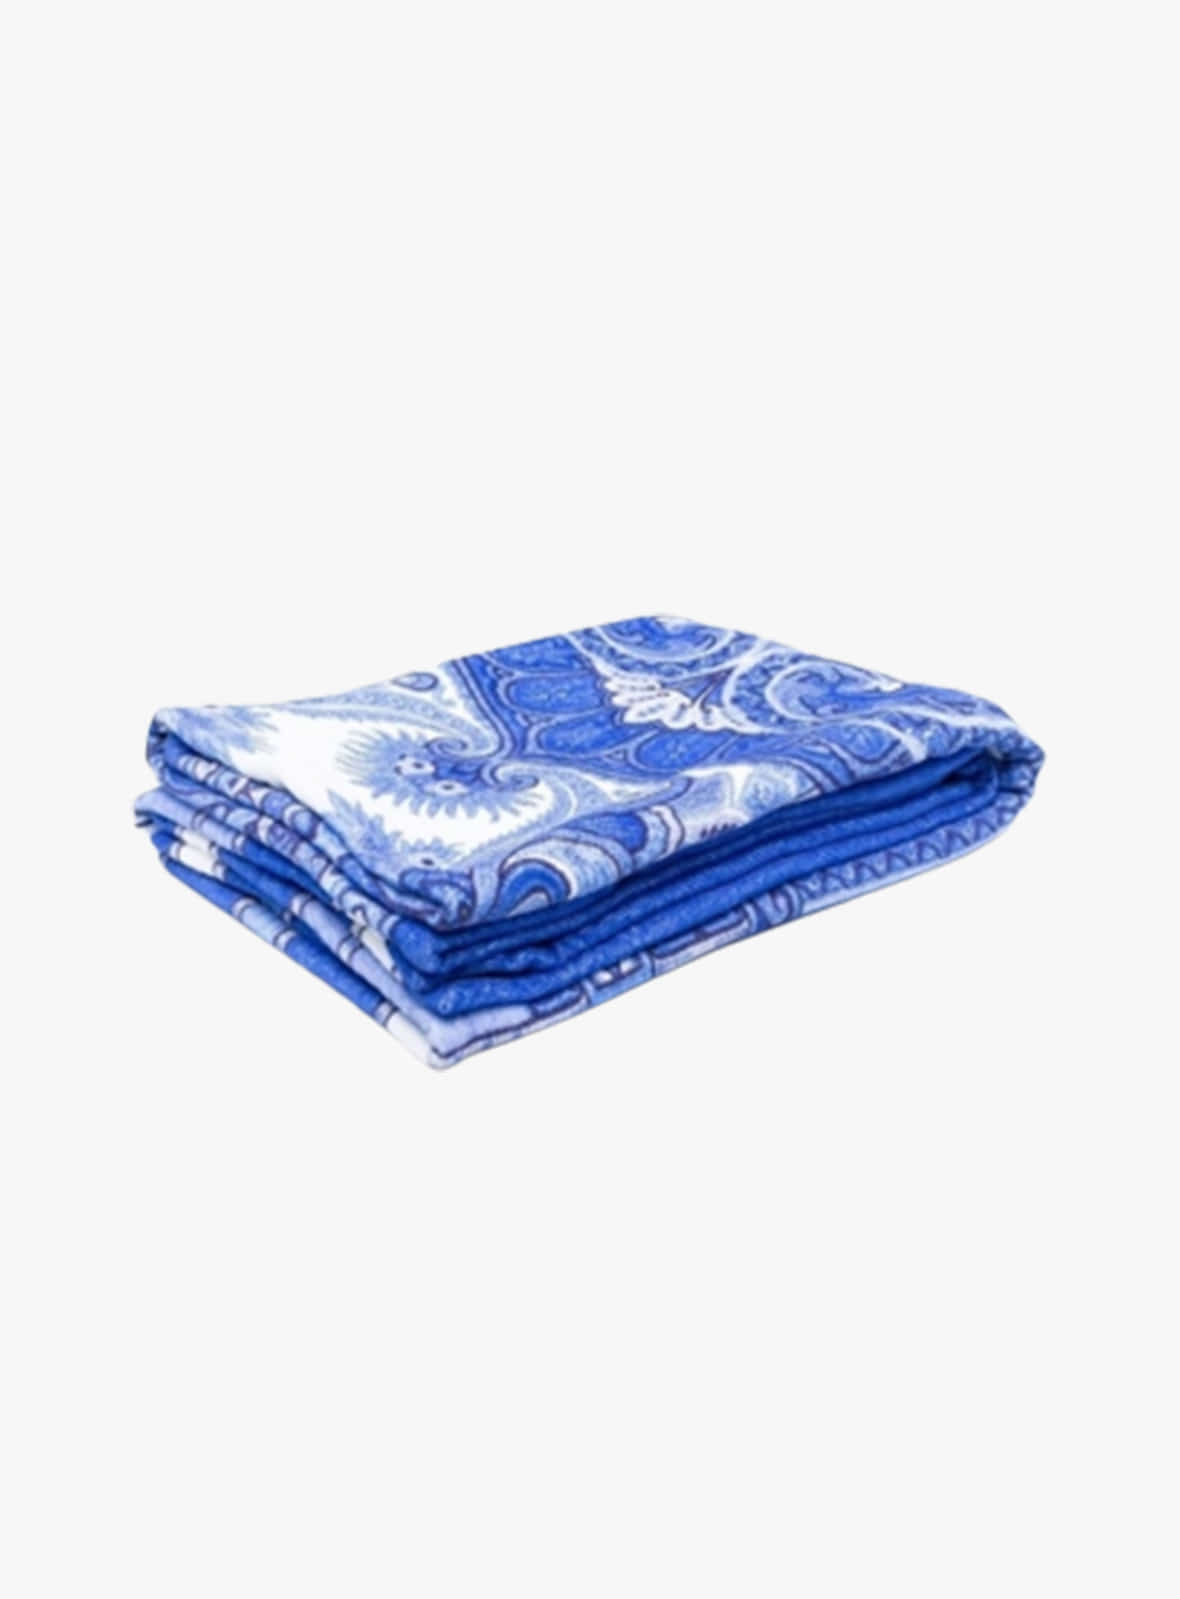 Etro - paisley-print bath towel from ETRO HOME 6545 41B71 200